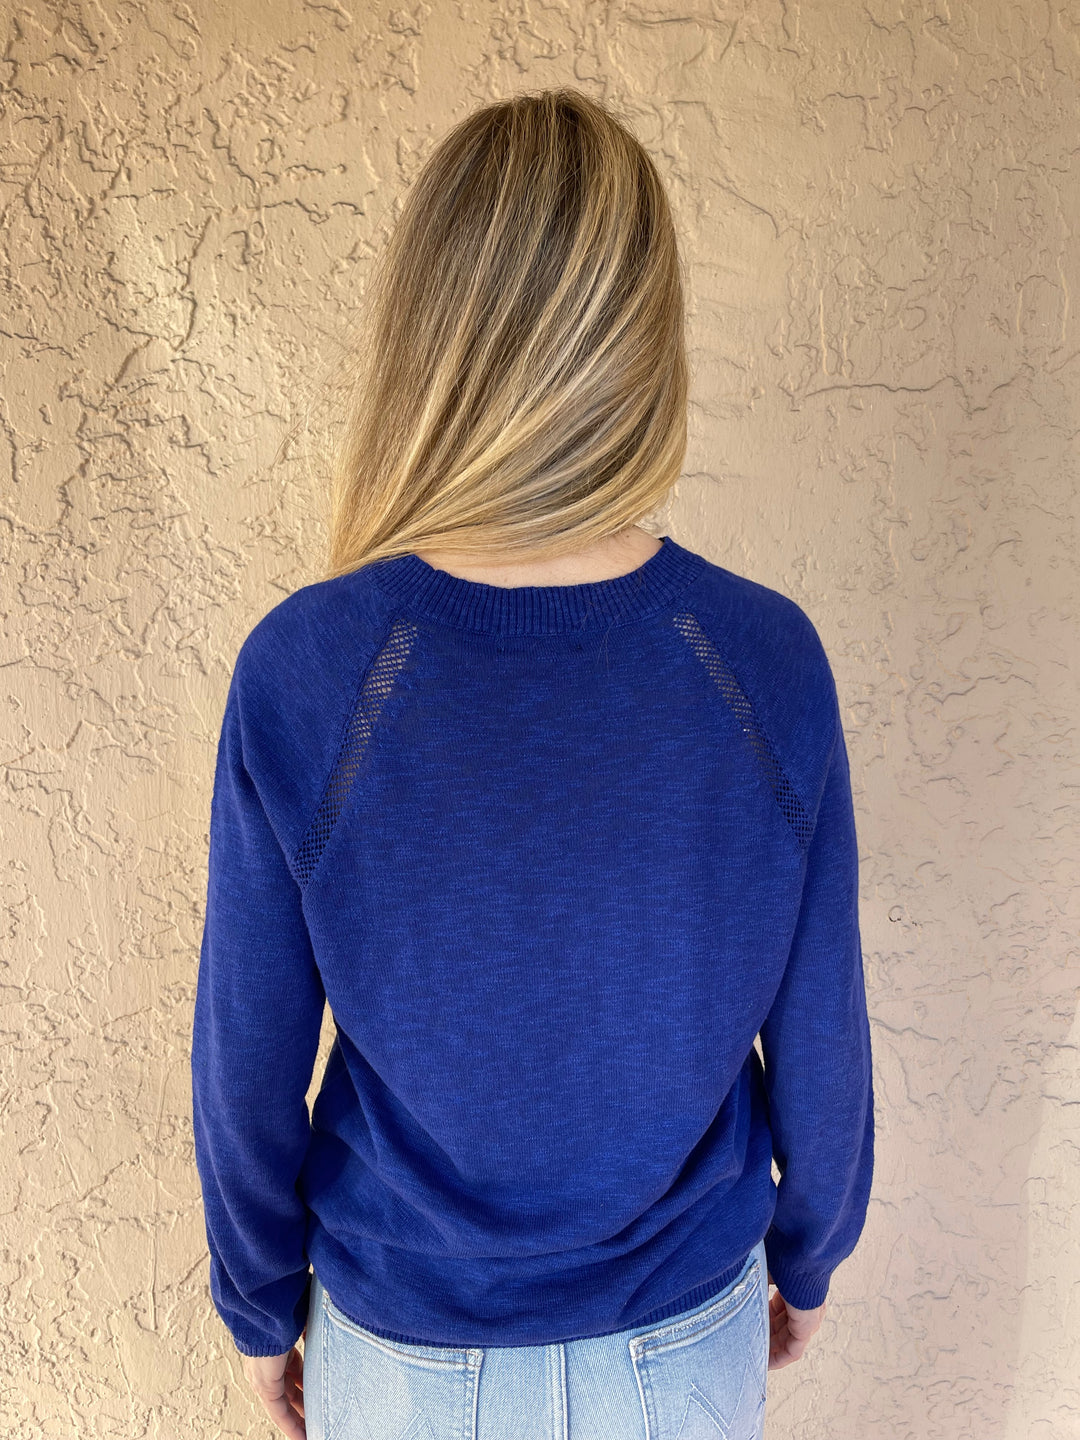 Barbara Katz Sweater Collection Cotton Linen Pointelle Crew Sweater - Galaxy Blue